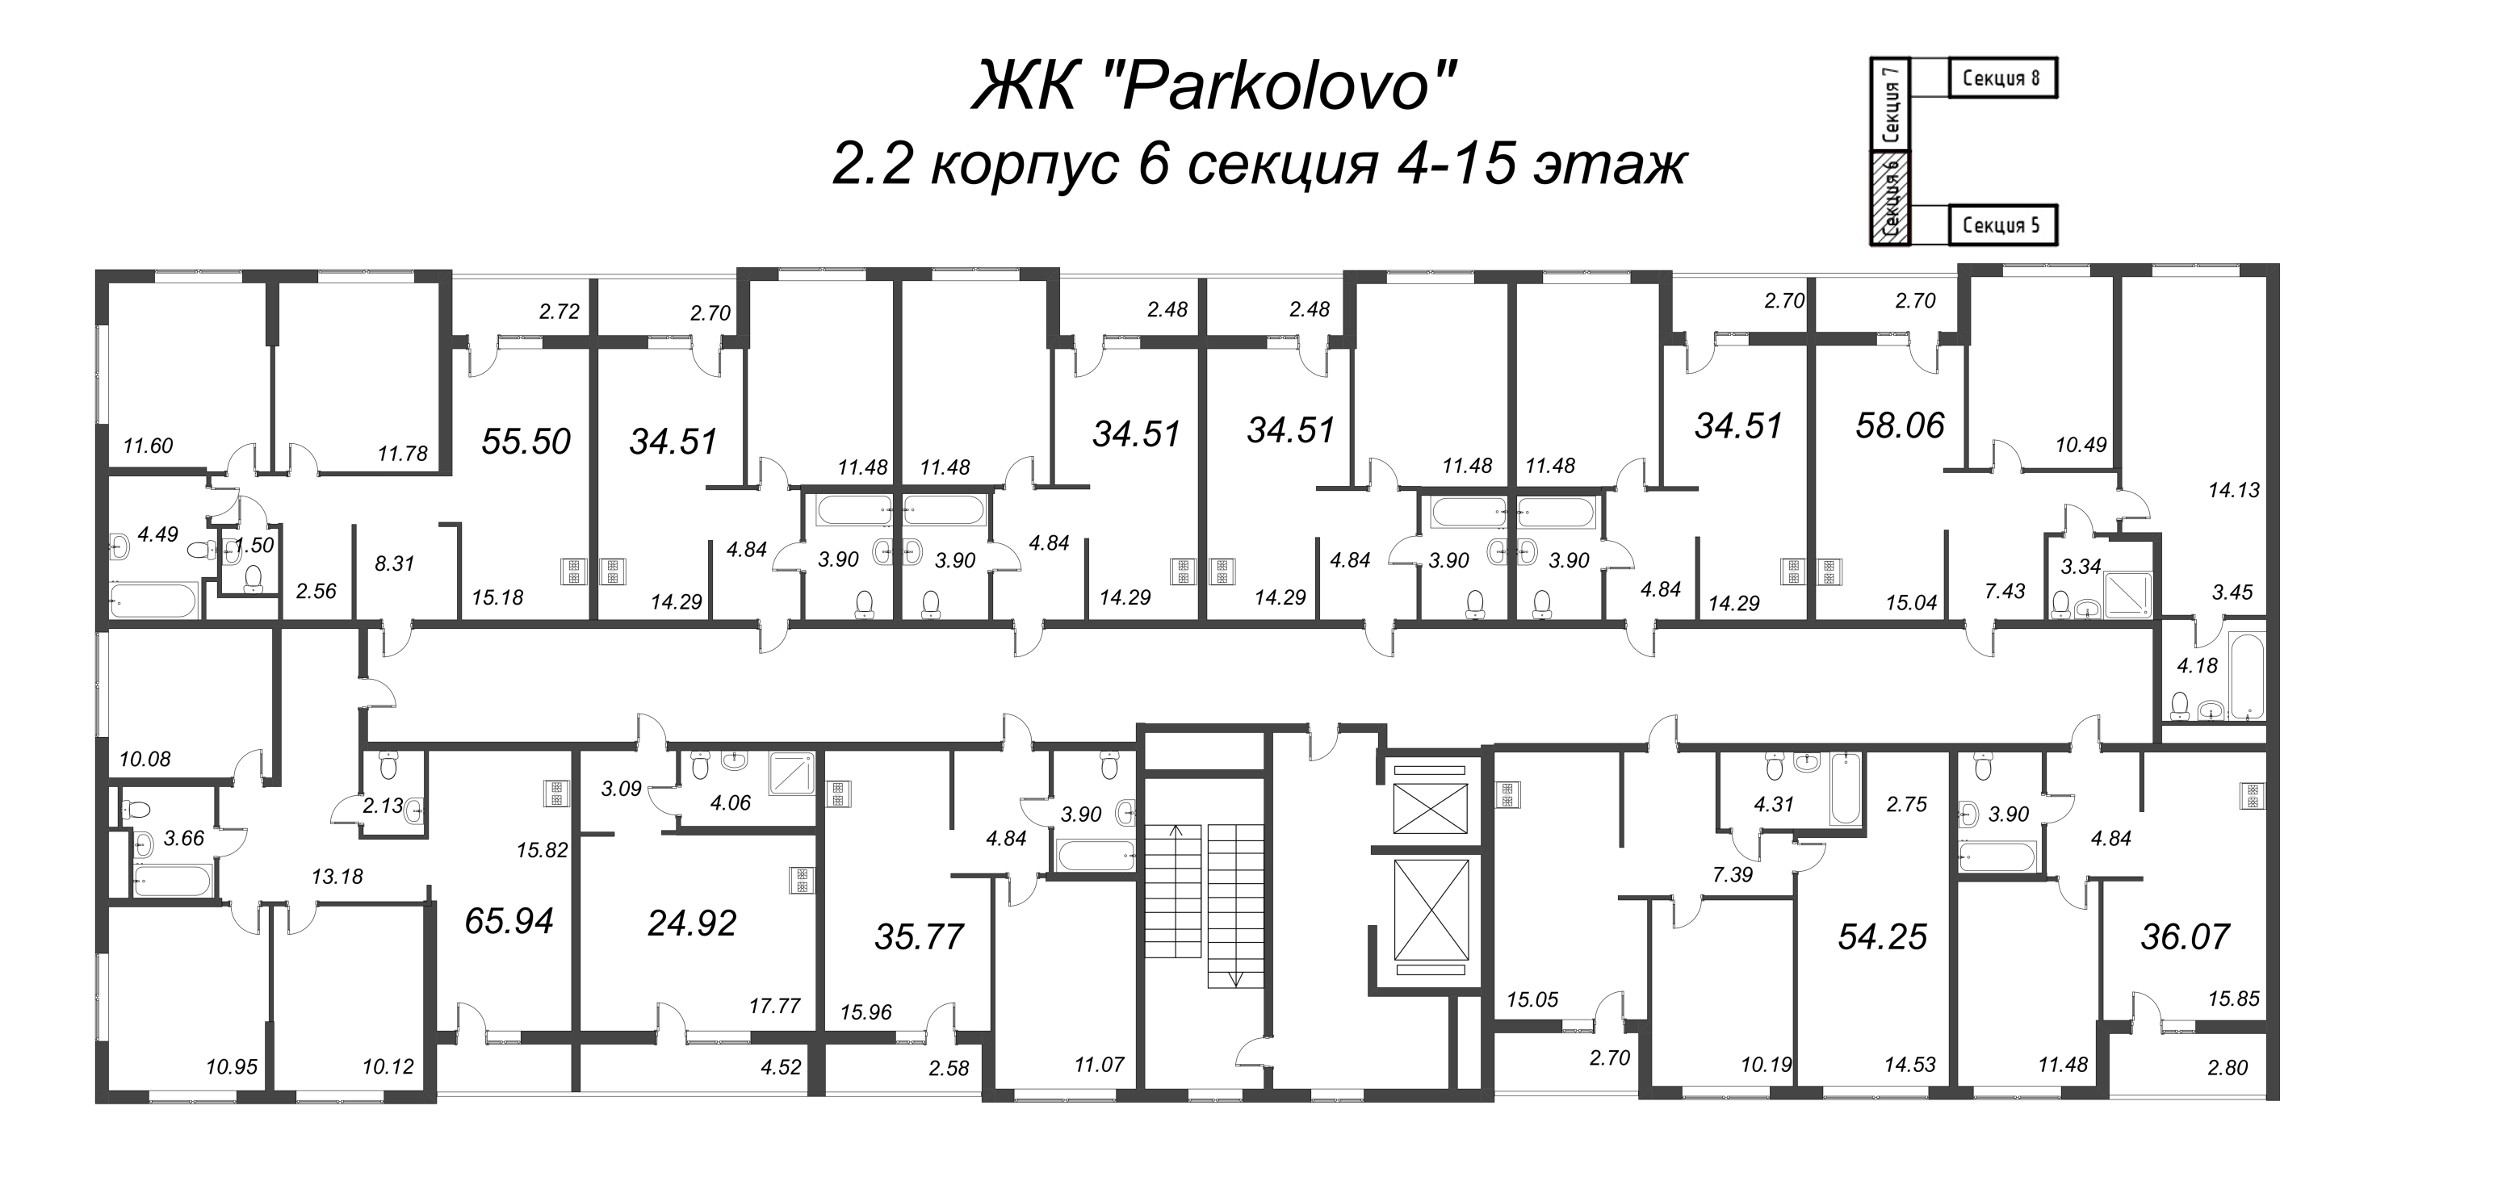 3-комнатная (Евро) квартира, 52.78 м² - планировка этажа